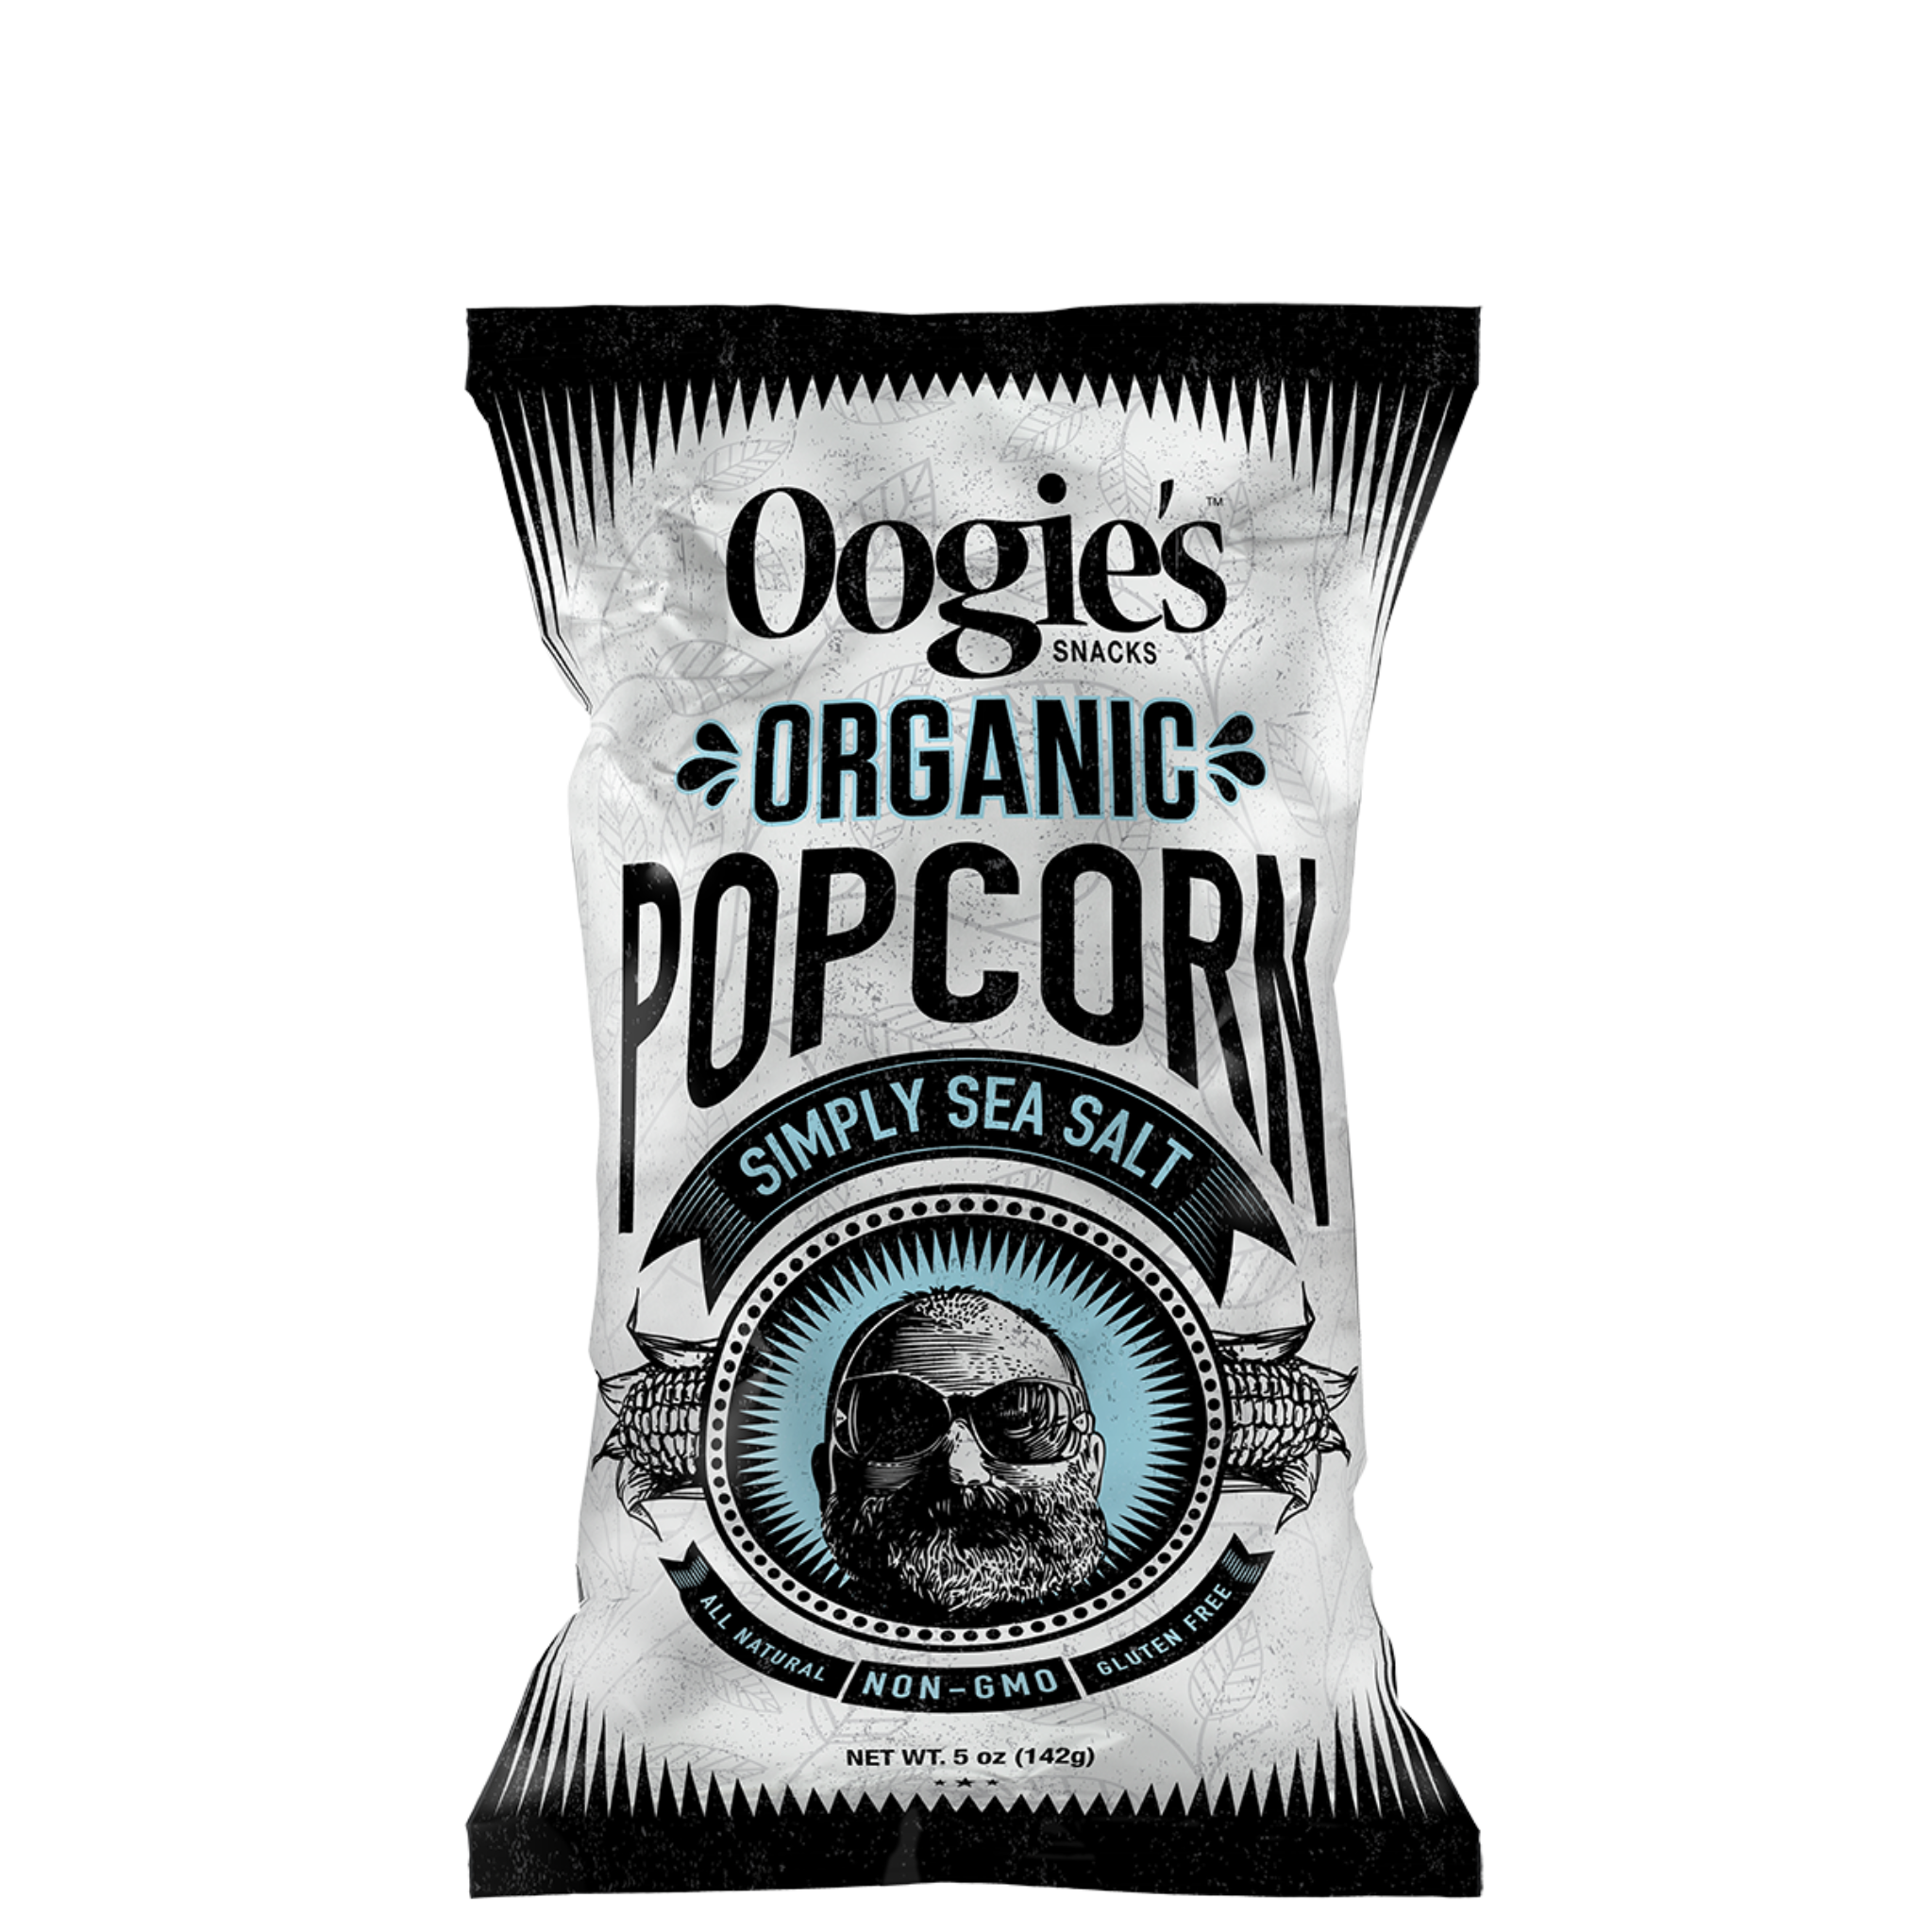 NEW! Organic Simply Sea Salt Popcorn Big Bag (5oz)